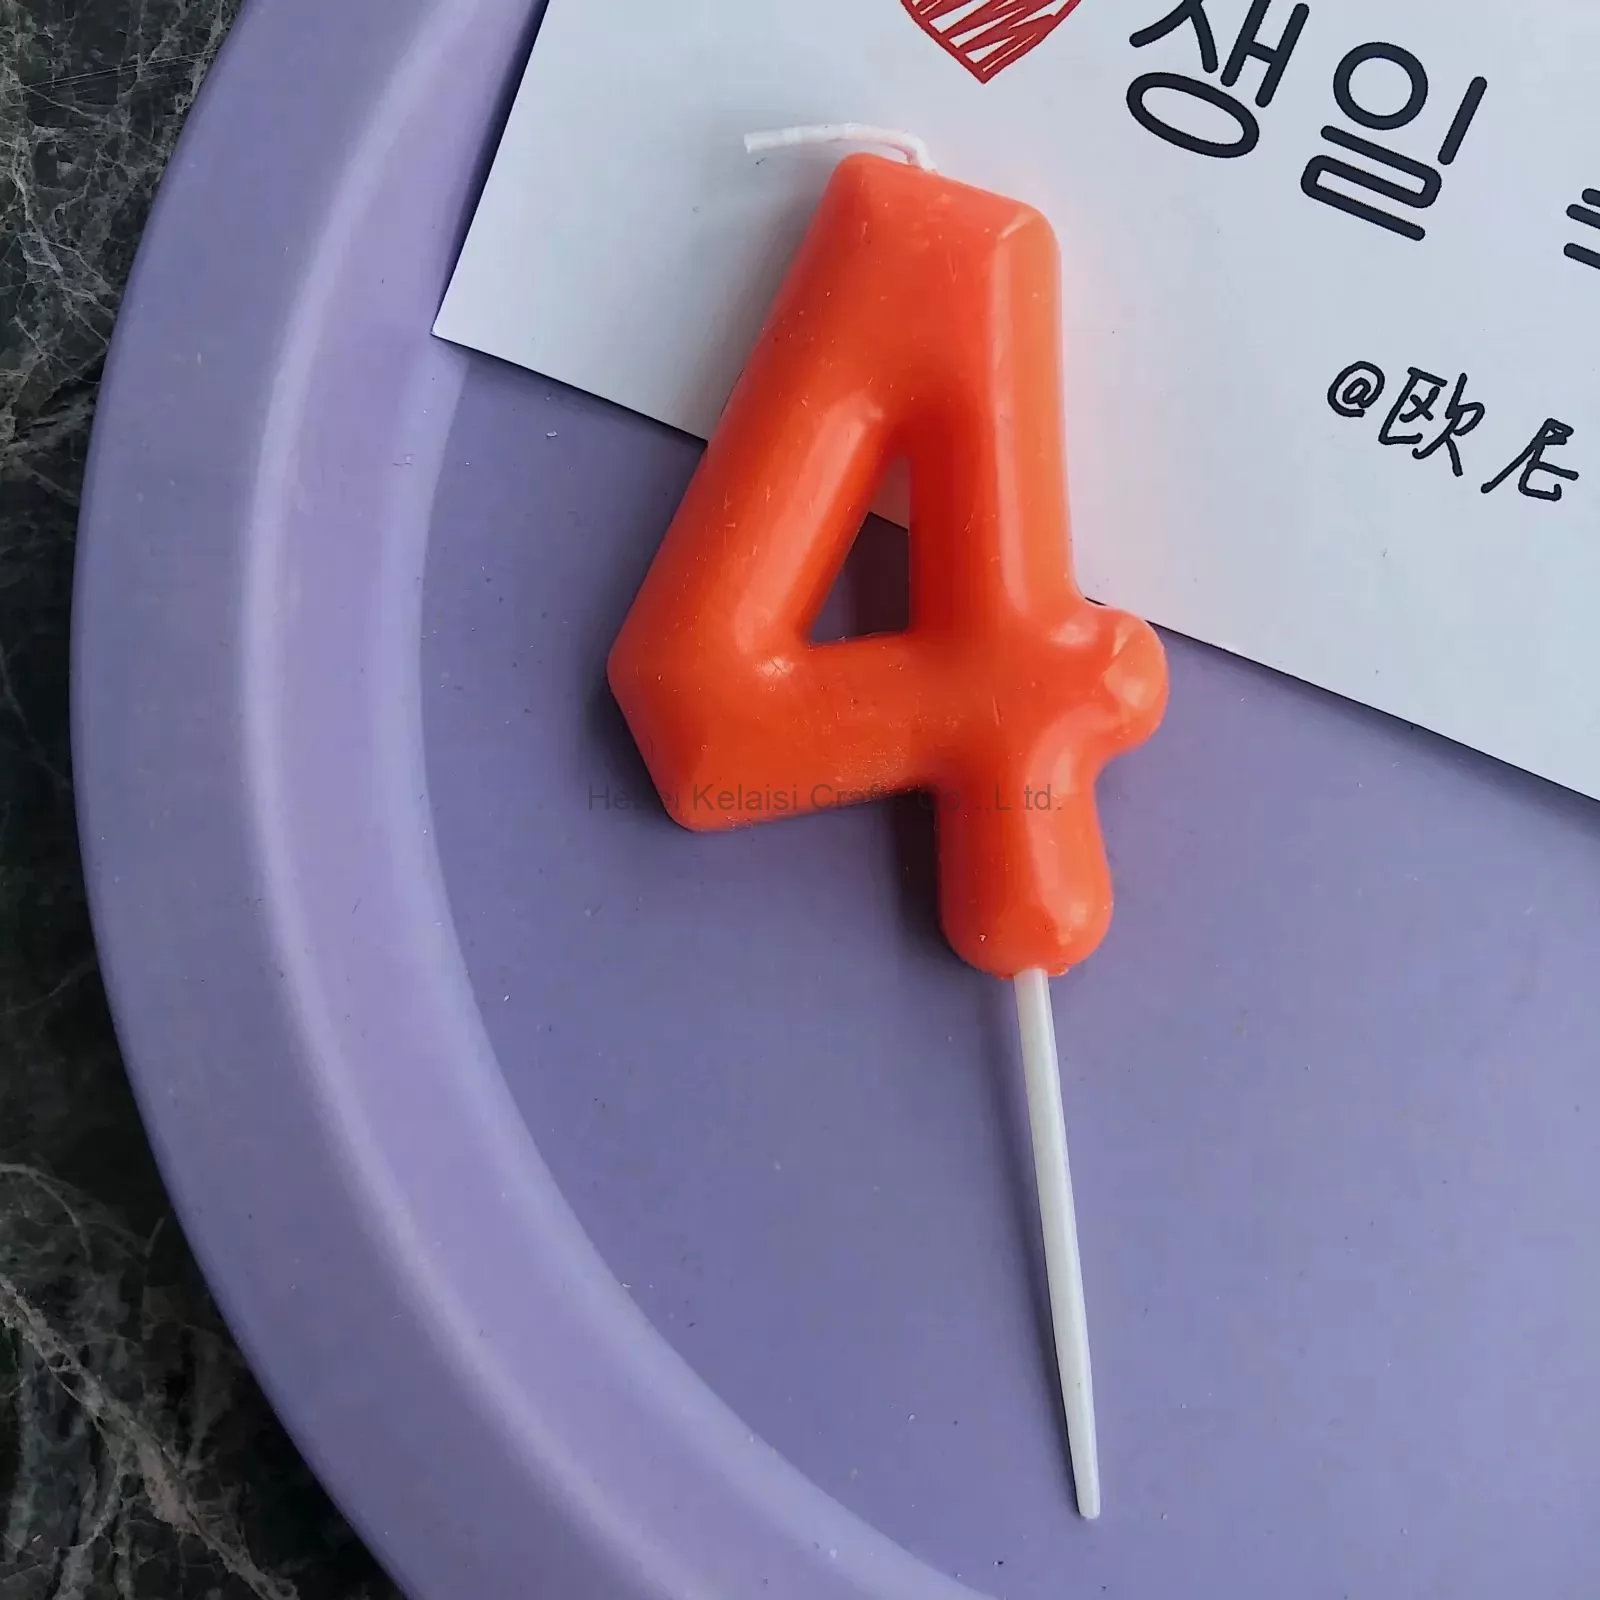 New Korean digital birthday candle